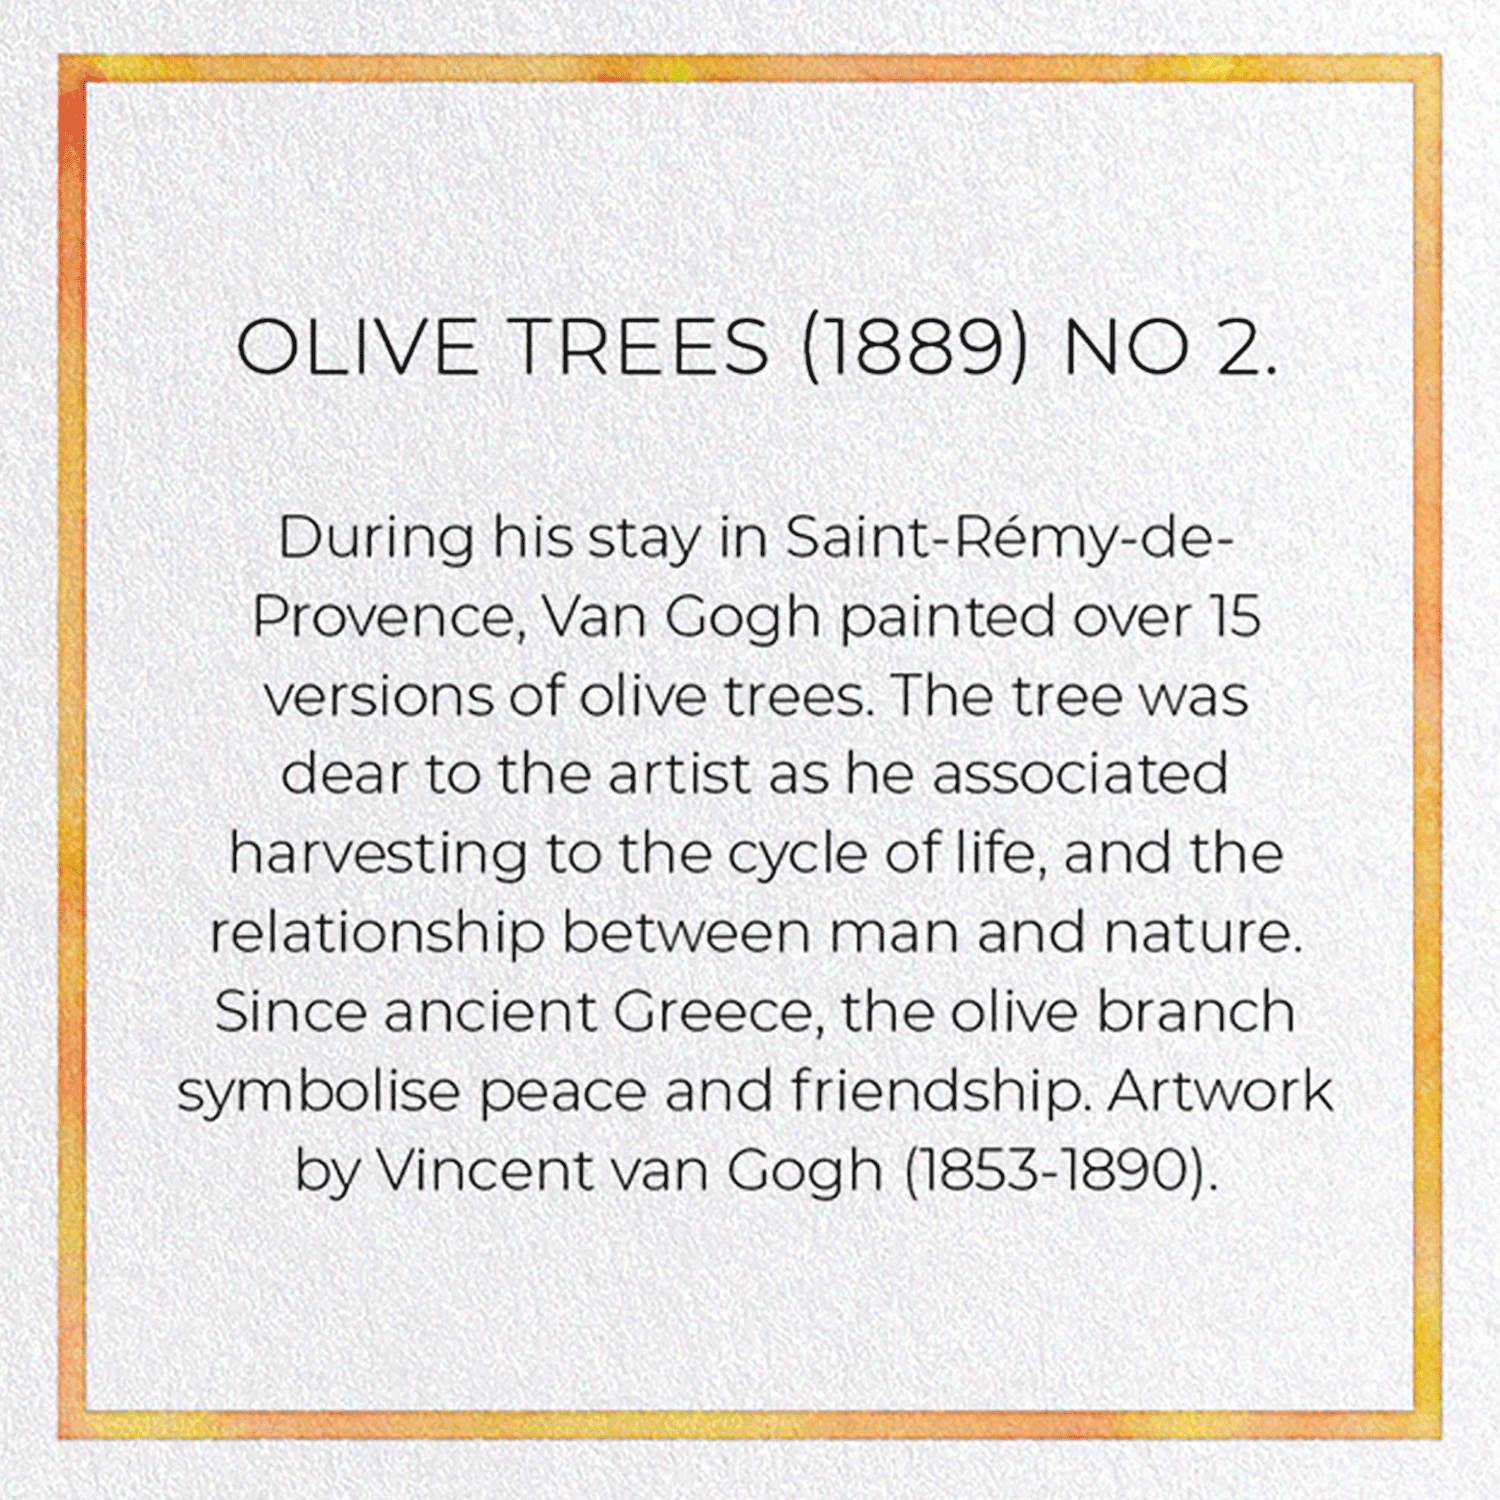 OLIVE TREES (1889) NO 2.